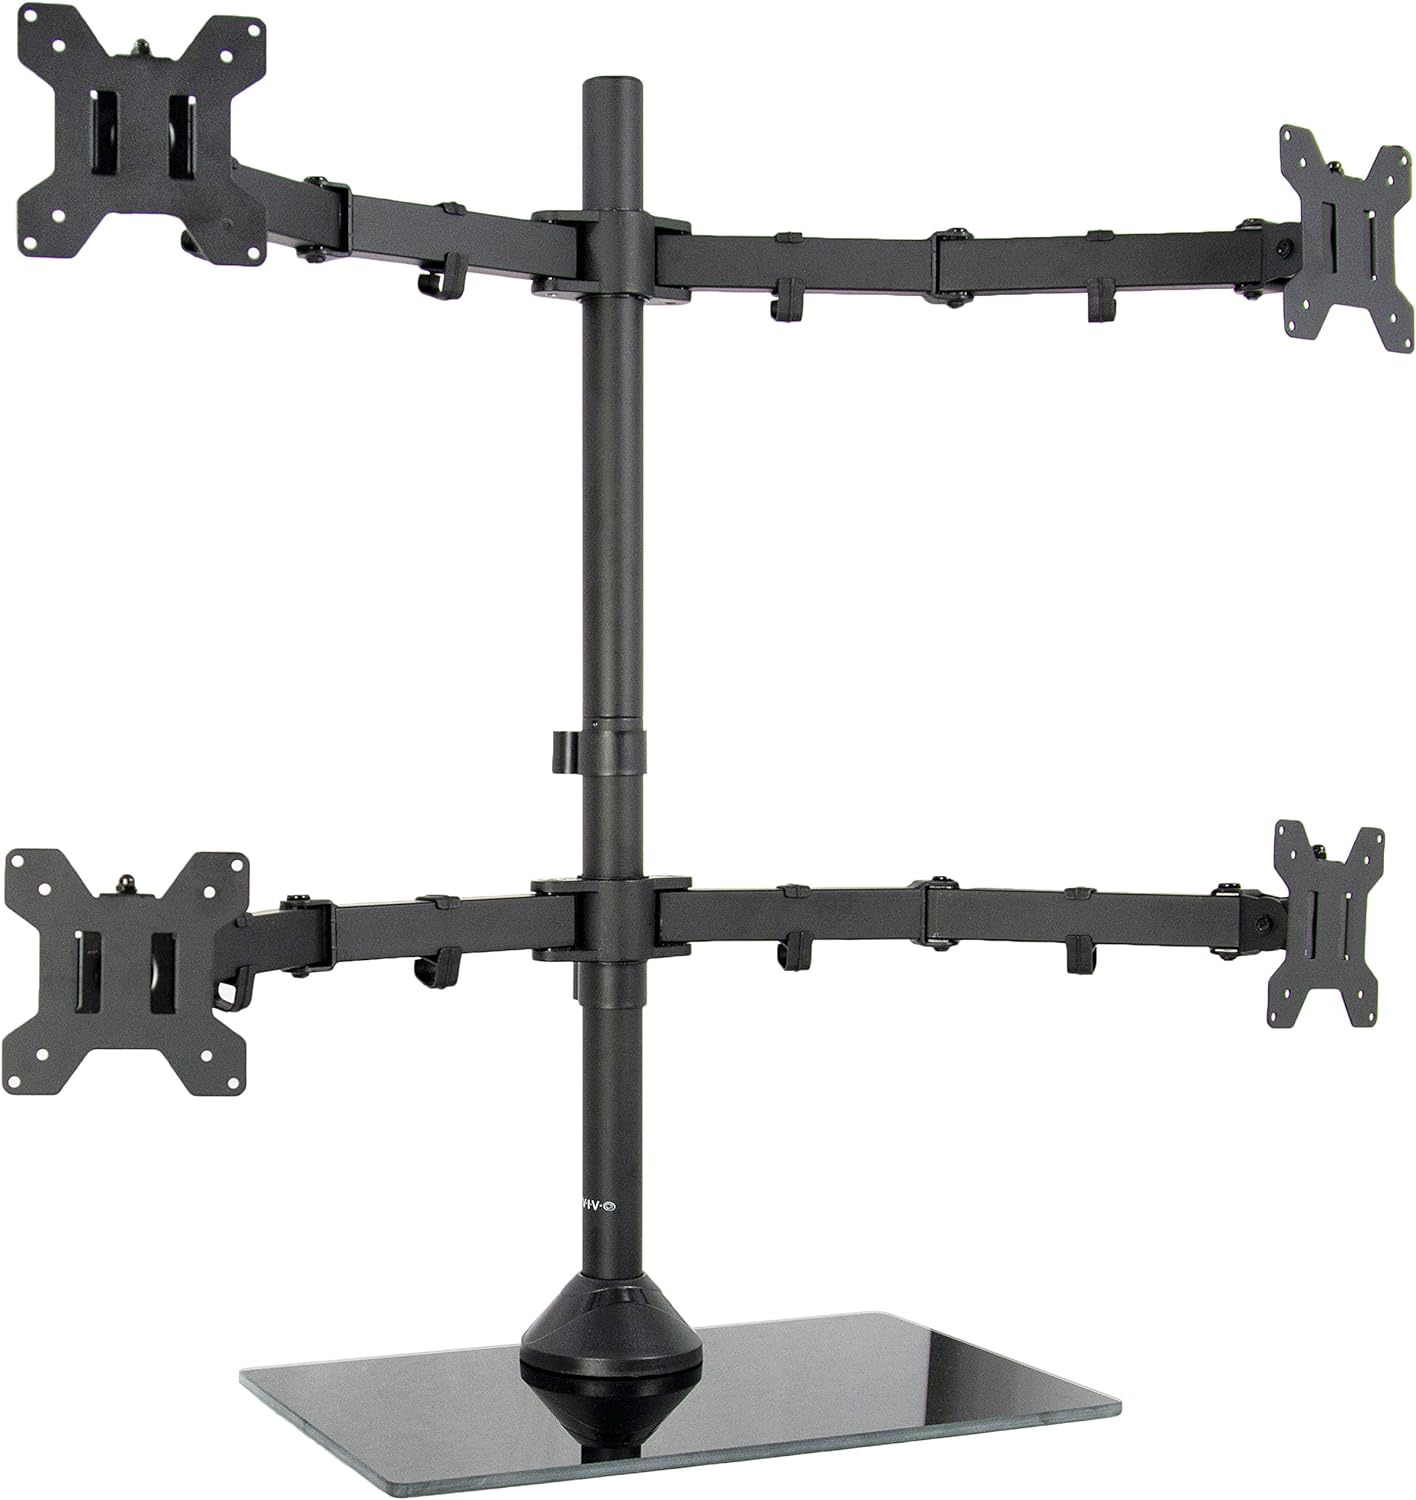 VIVO Black Adjustable Quad Monitor Desk Stand Mount, Free Standing Heavy Duty 4